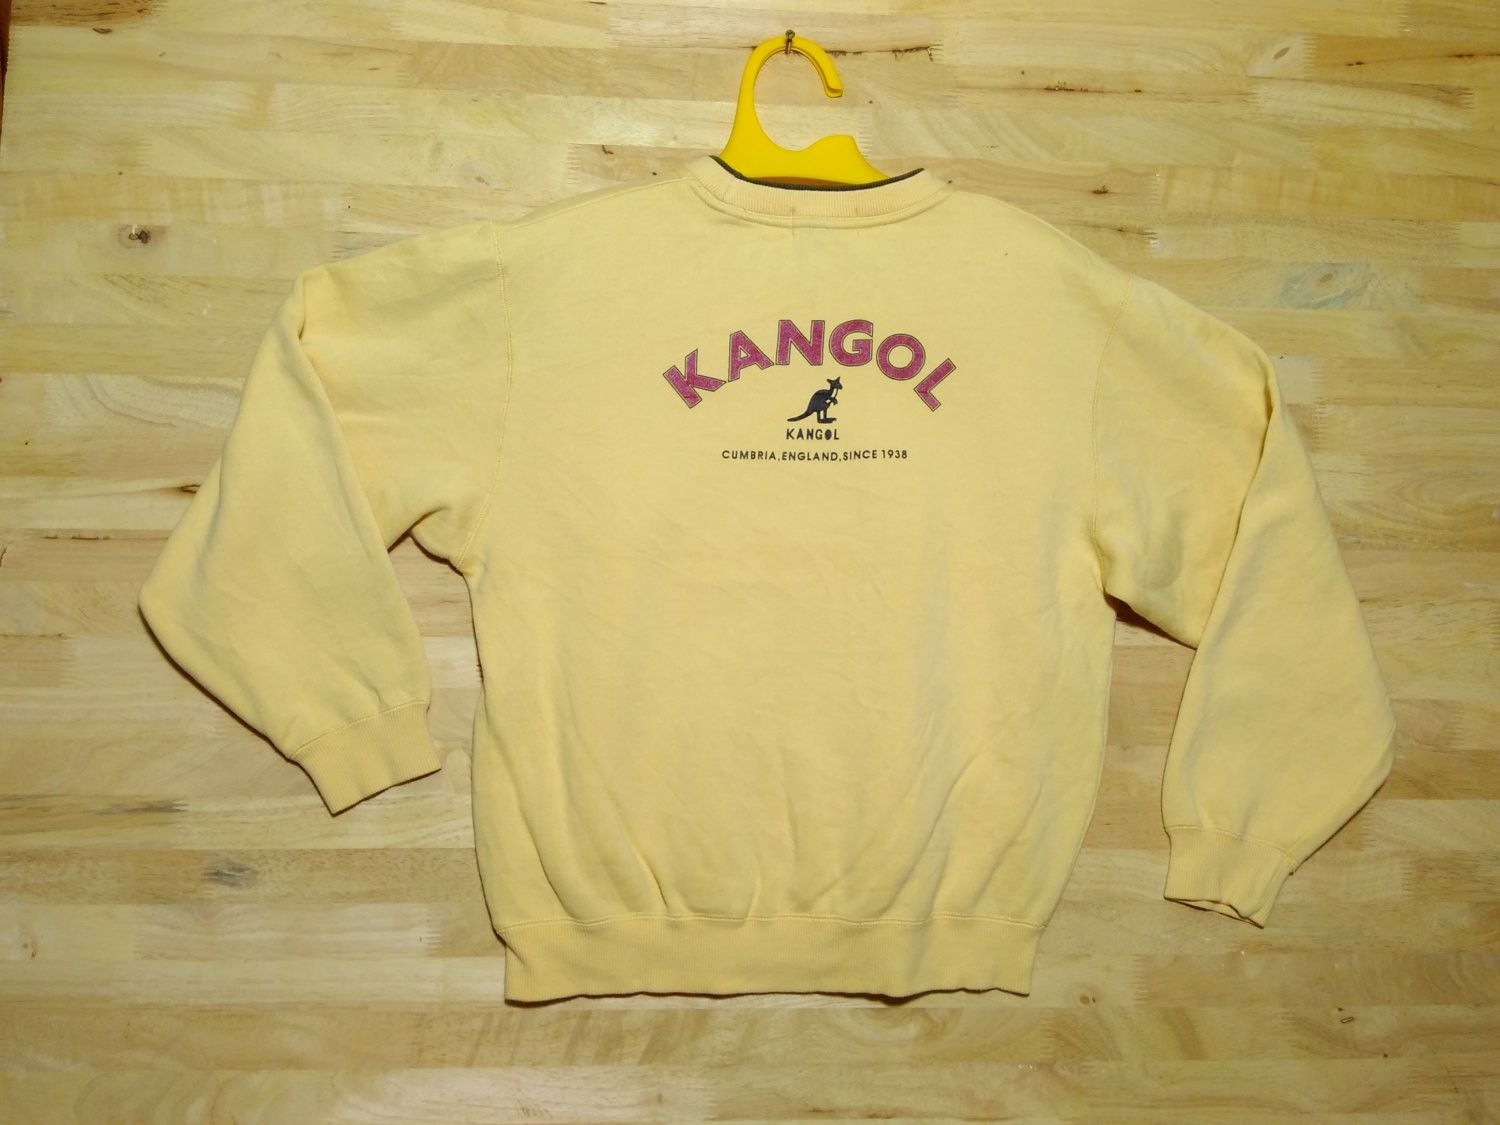 Kangol Last Drop - Crewneck Sweatshirt Size US M / EU 48-50 / 2 - 1 Preview